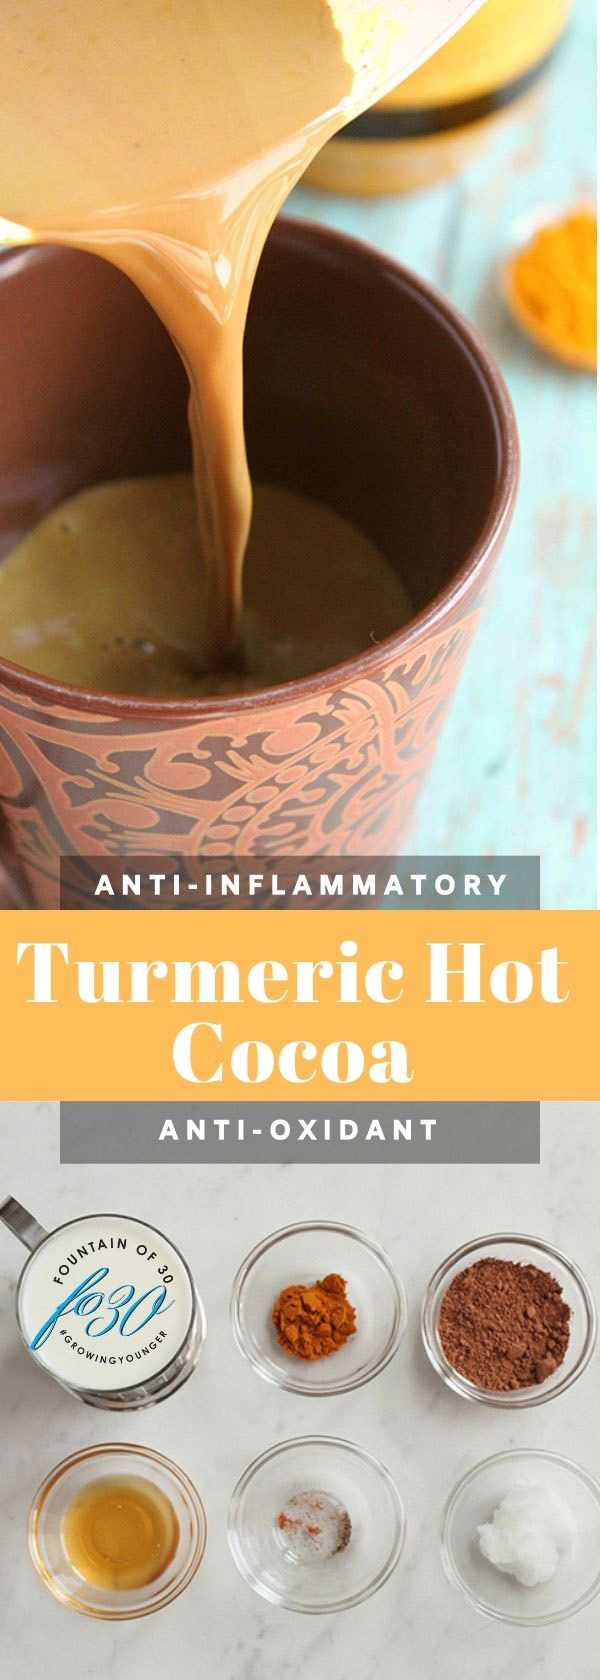 turmeric hot cocoa drink recipe fountainof30